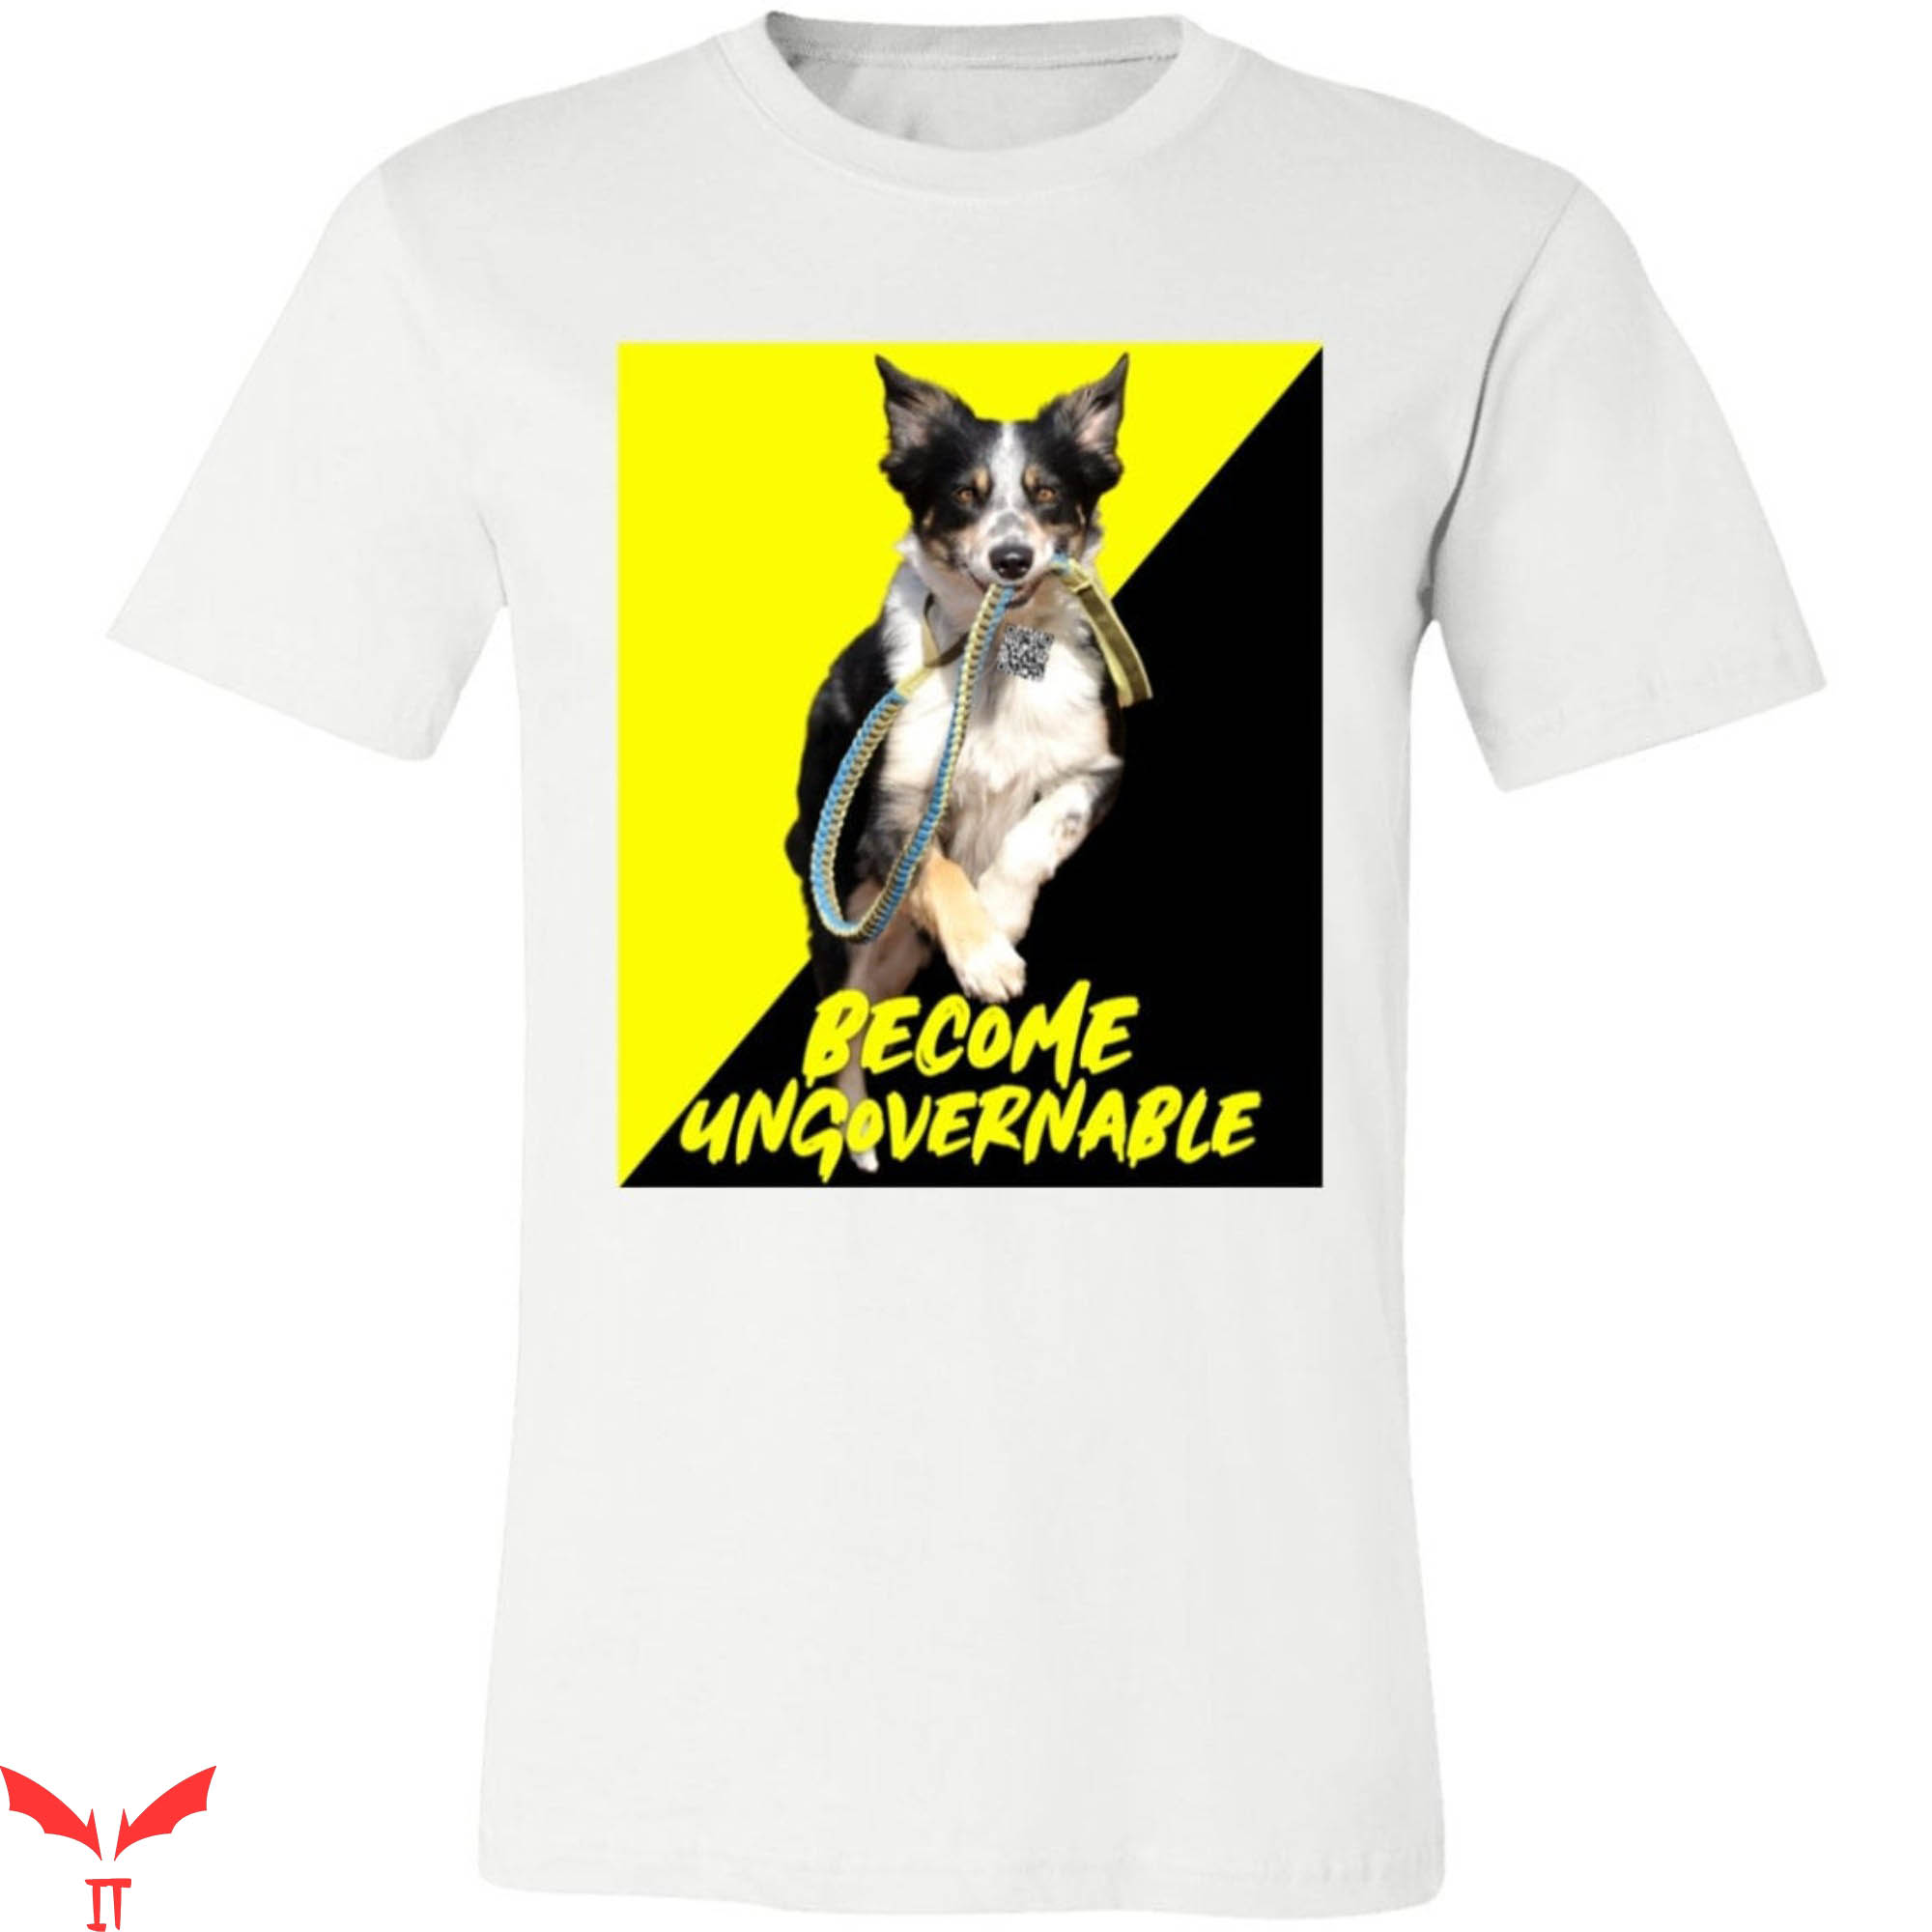 Become Ungovernable T-Shirt Dog Meme Voluntaryist Flag Tee